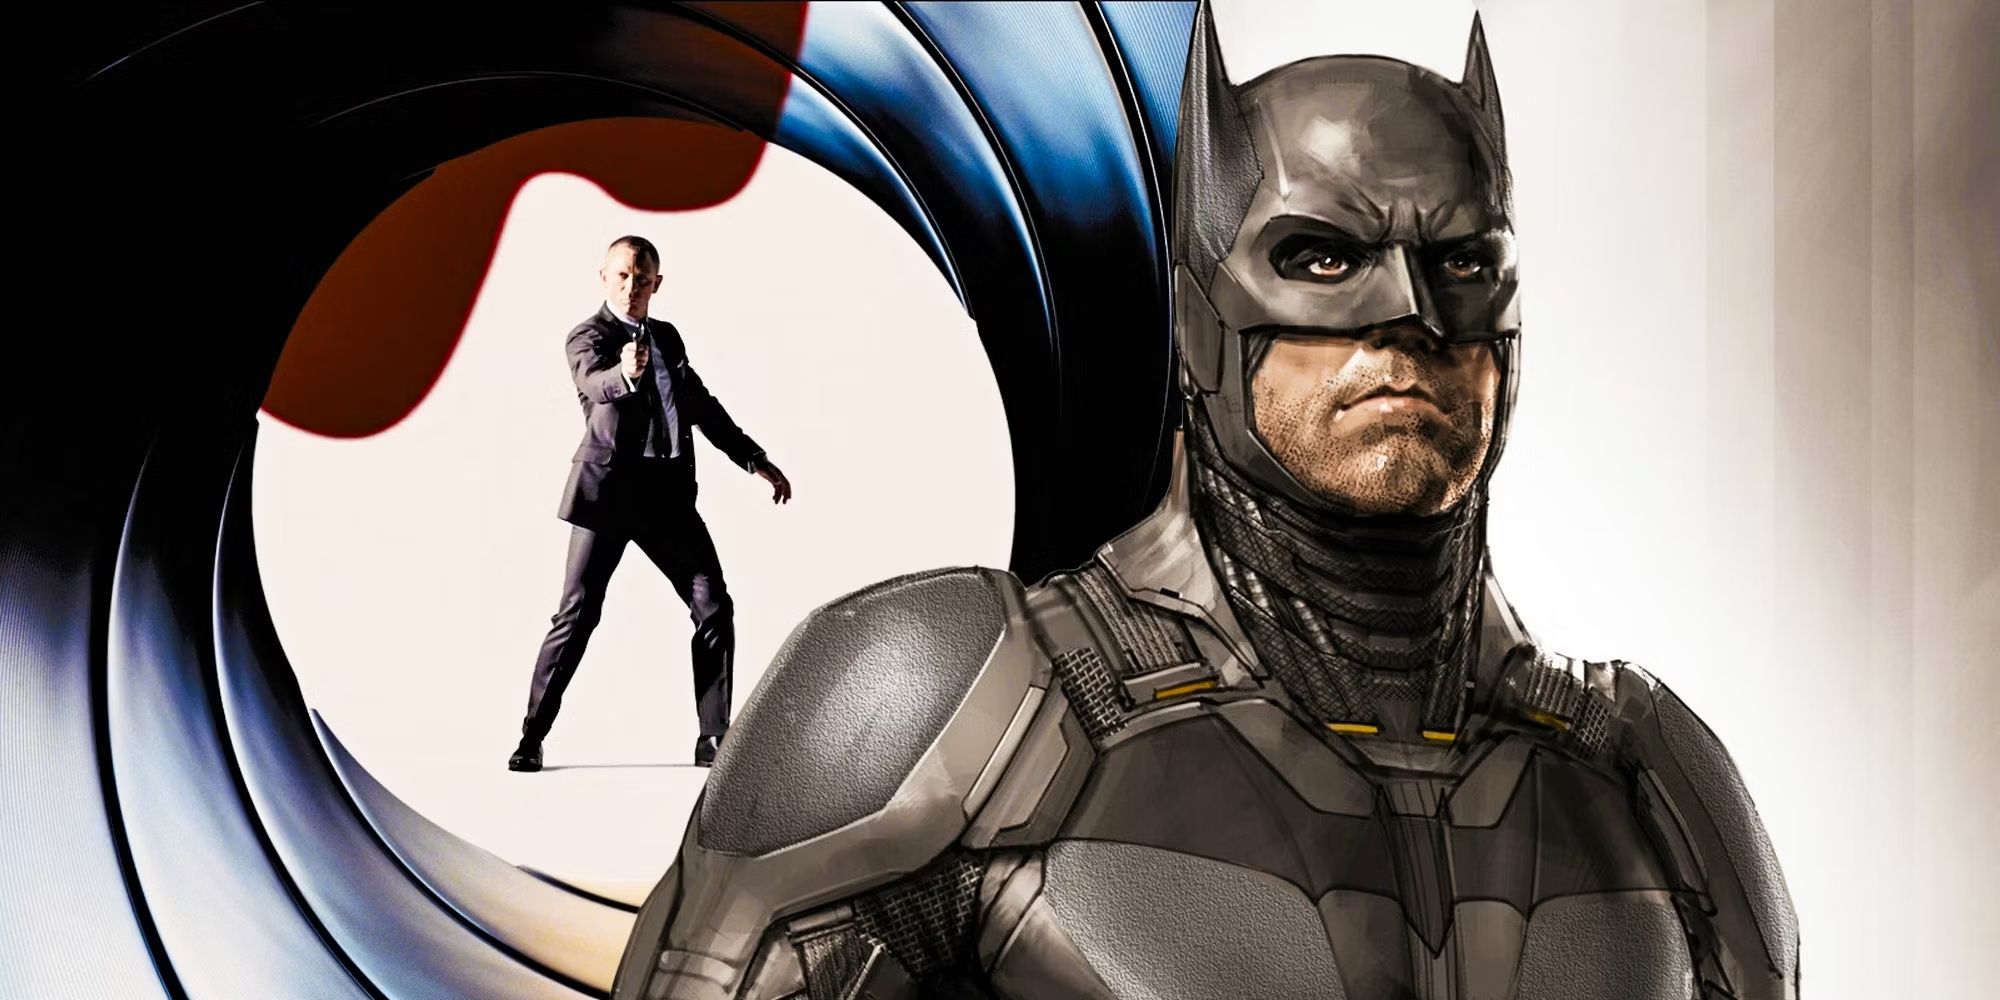 Collage Image with Ben Affleck Batman and Daniel Craig James Bond